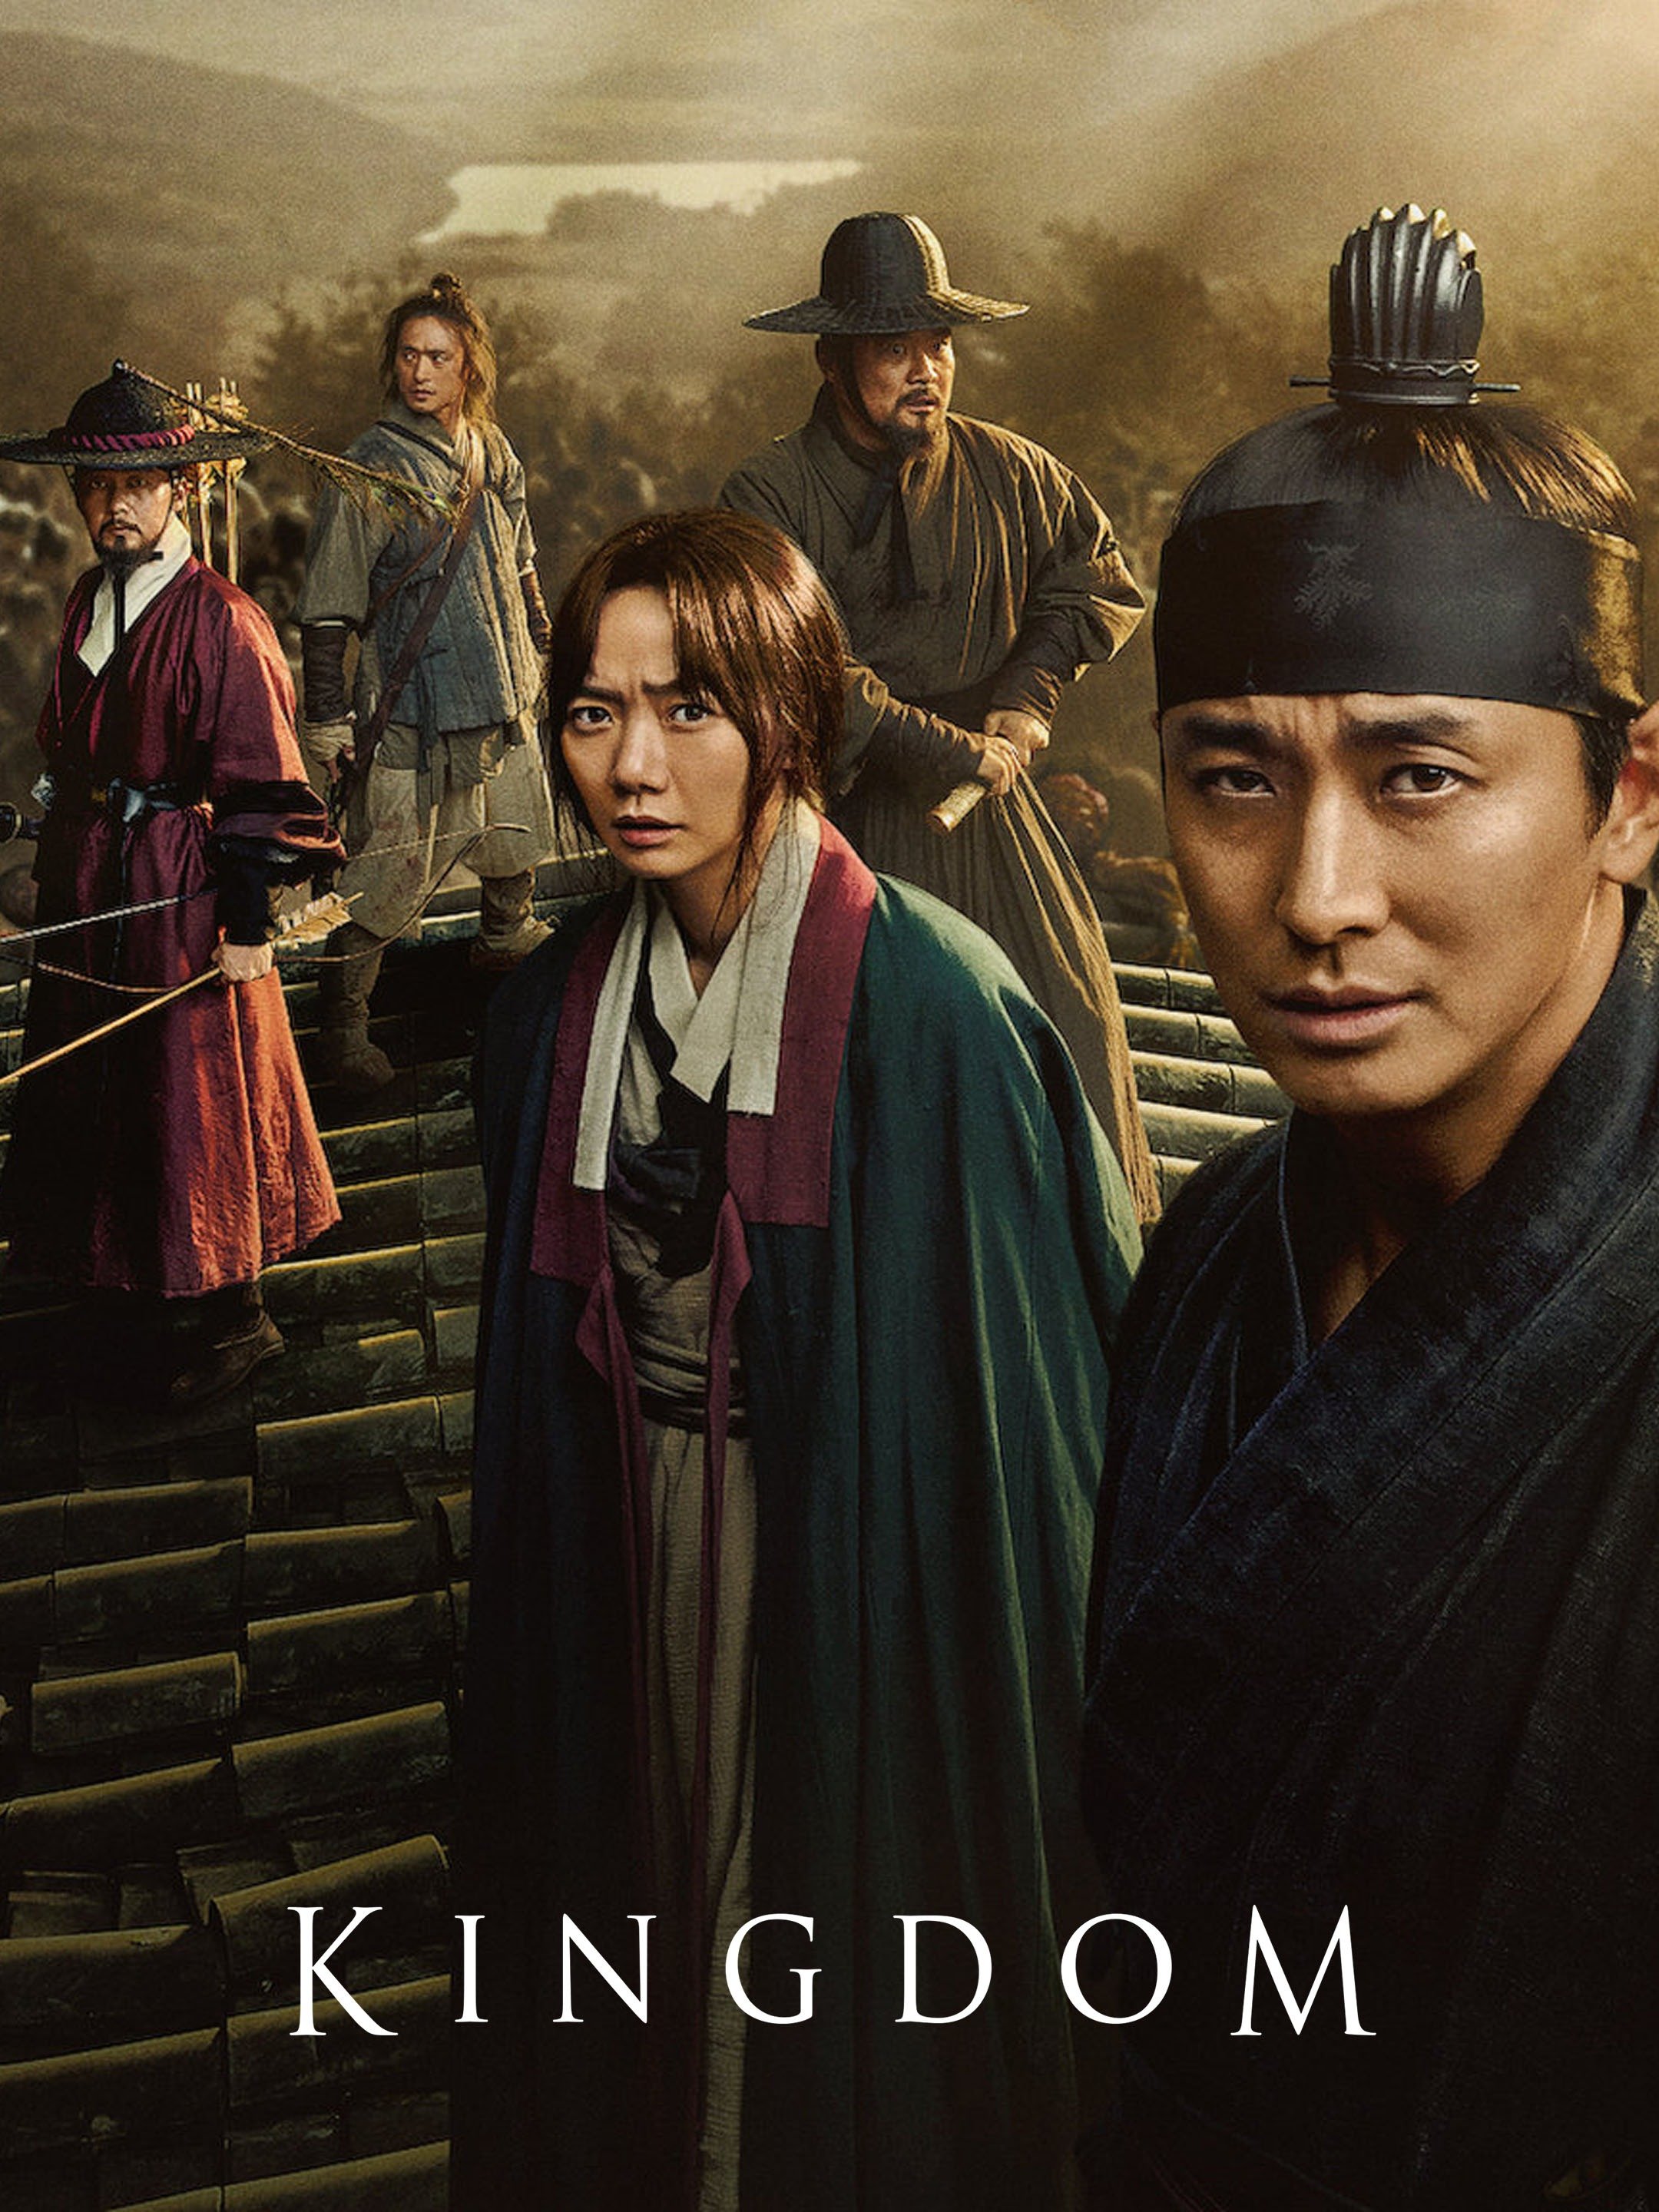 Of kingdom the north cast ashin Netflix's 'Kingdom: